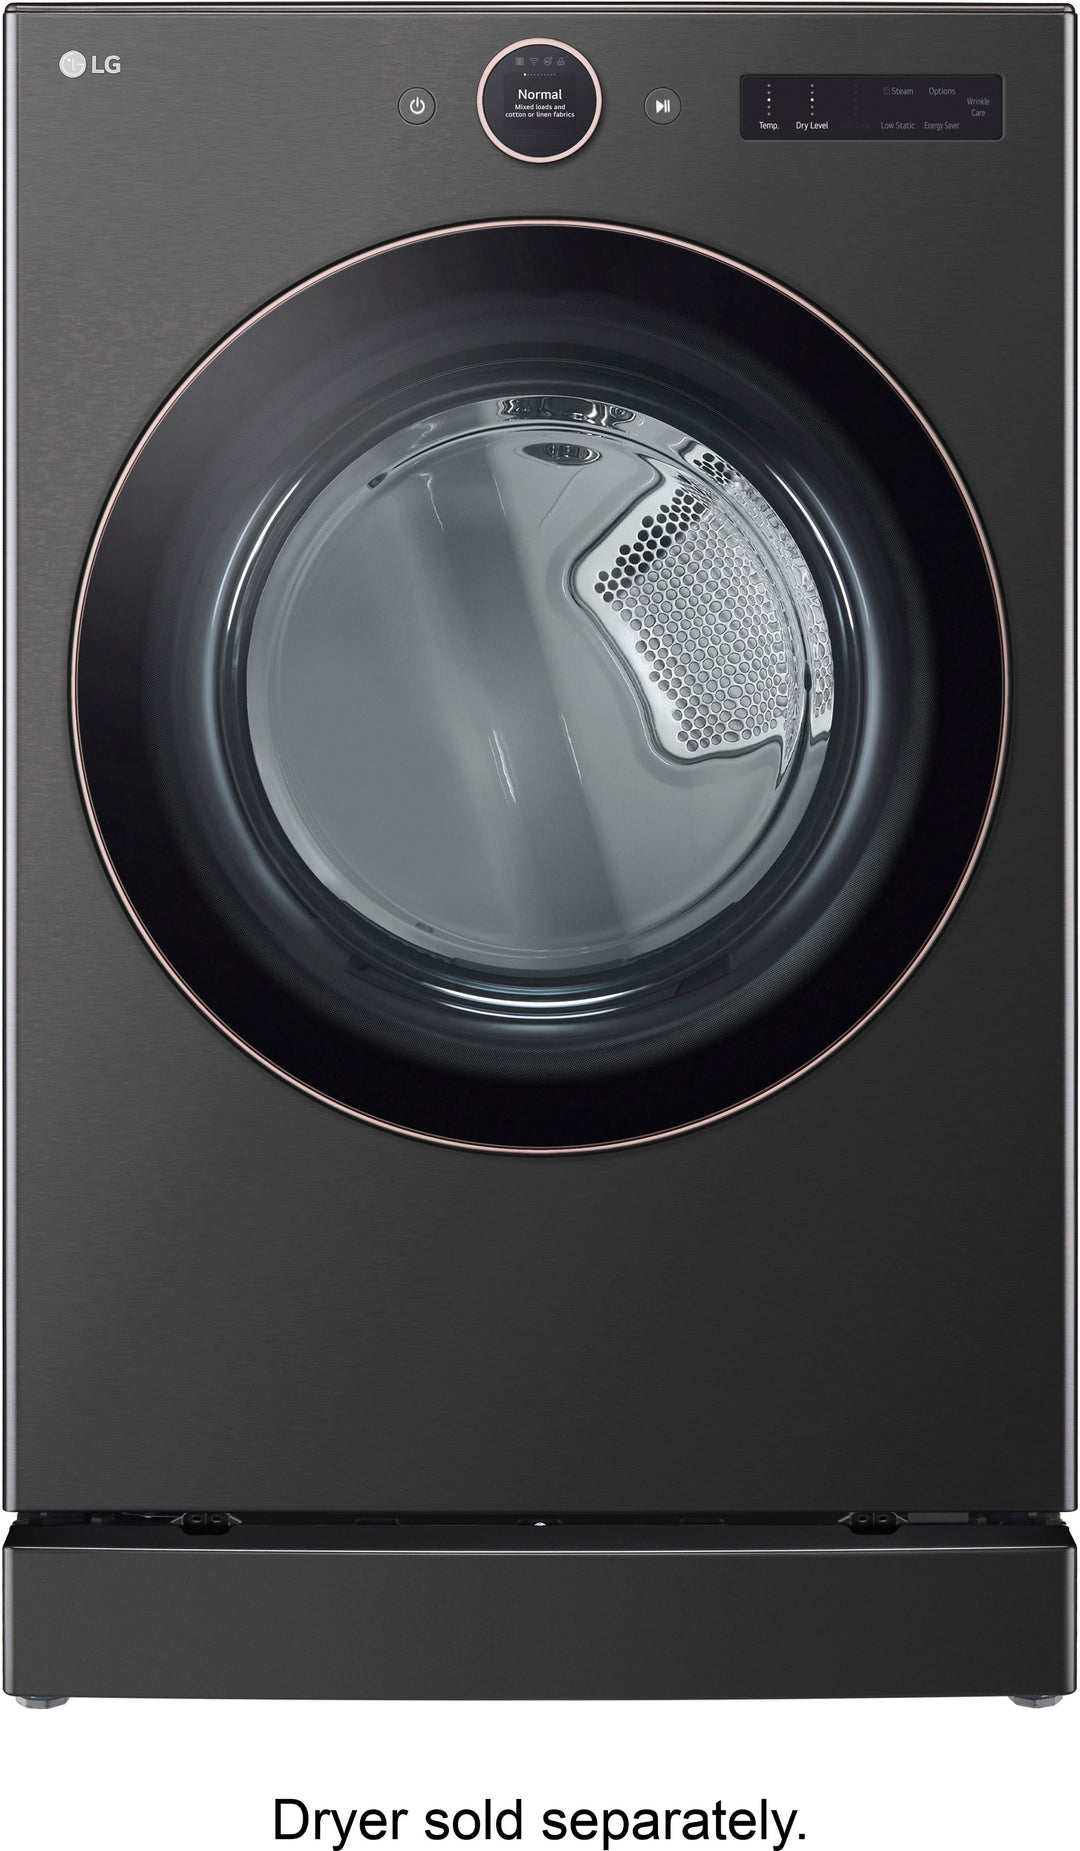 LG - ADA Laundry Pedestal Riser - Black Steel_7